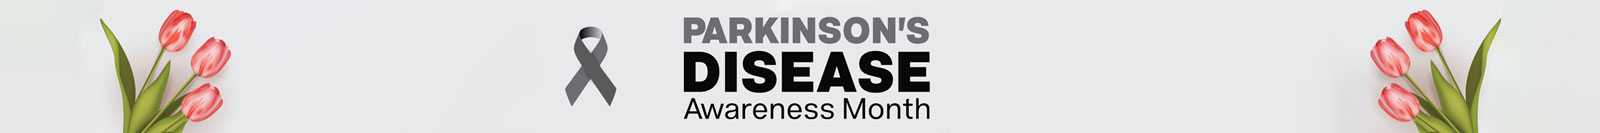 April is Parkinson's Disease Awareness Month